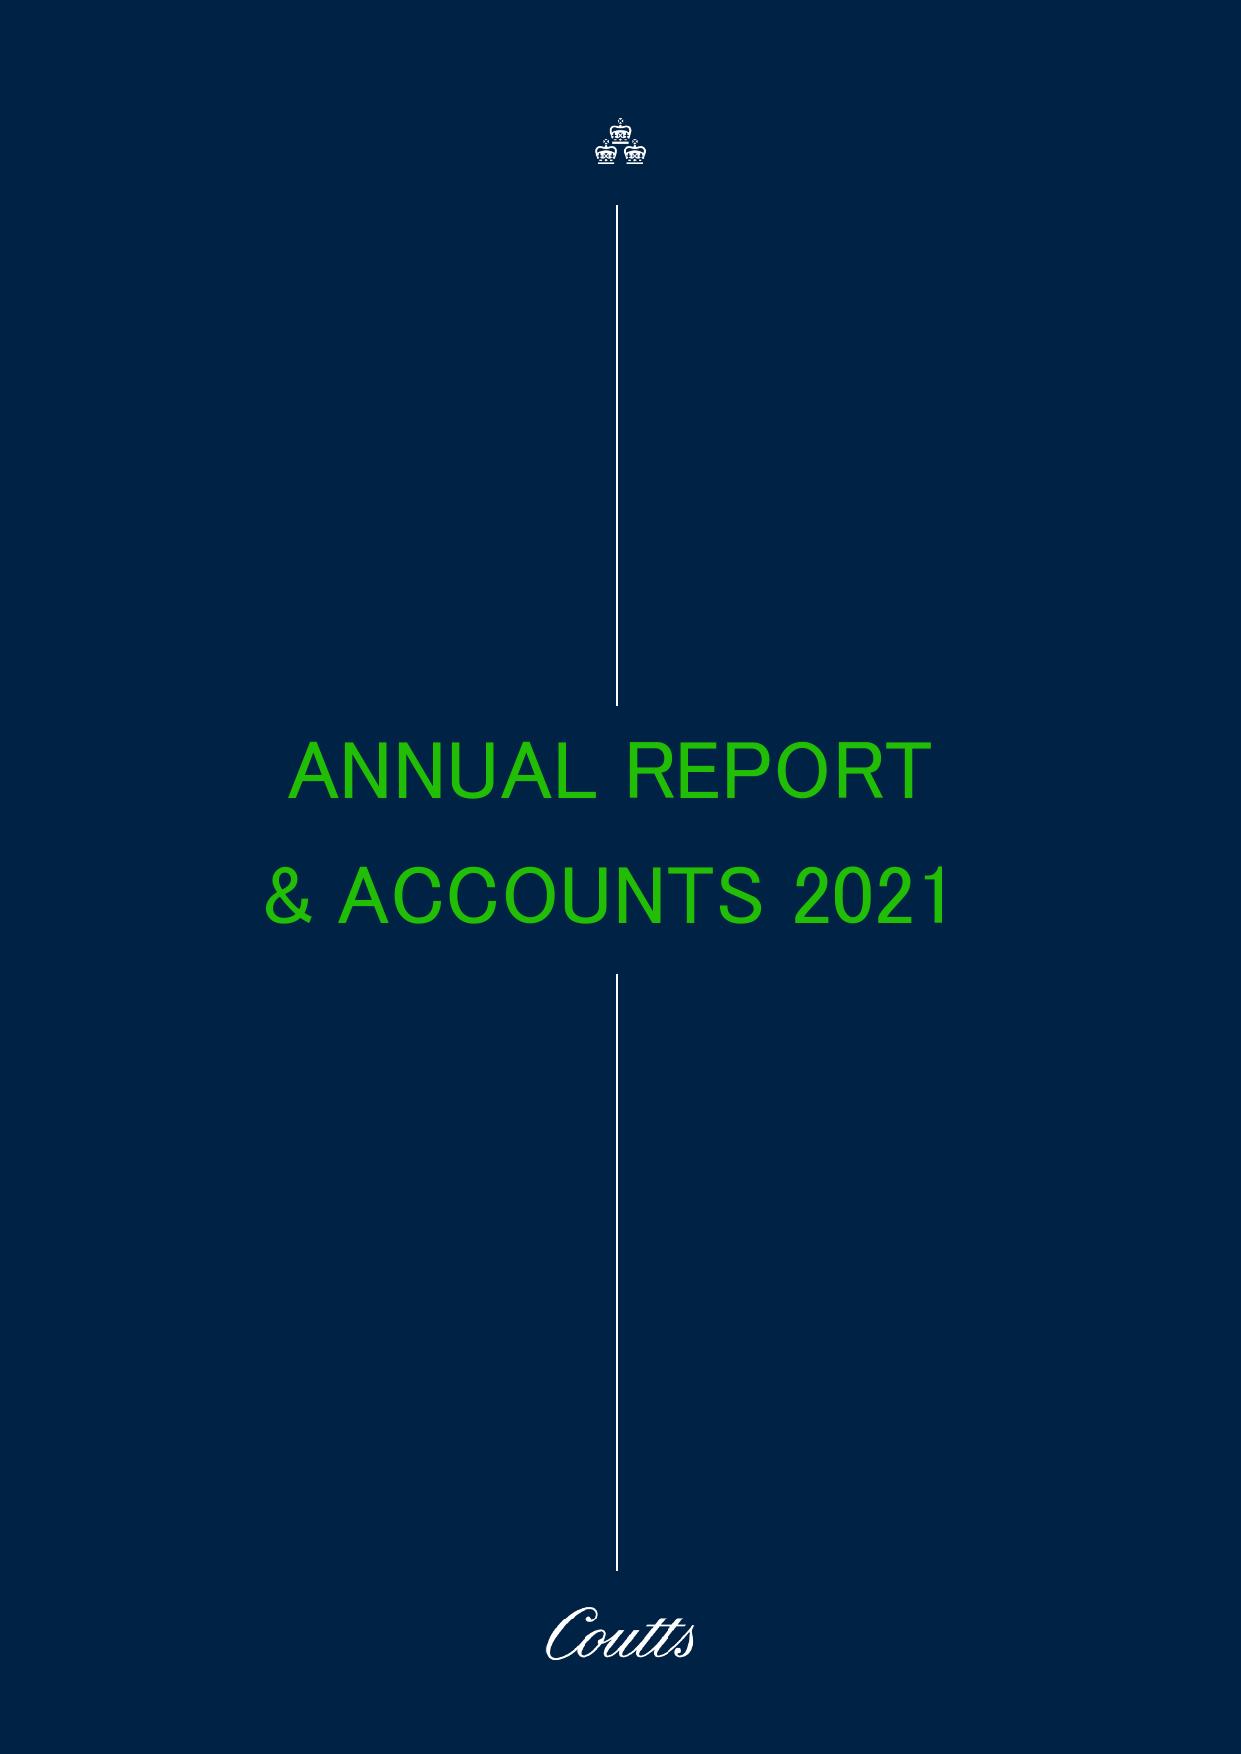 VANCITY 2021 Annual Report